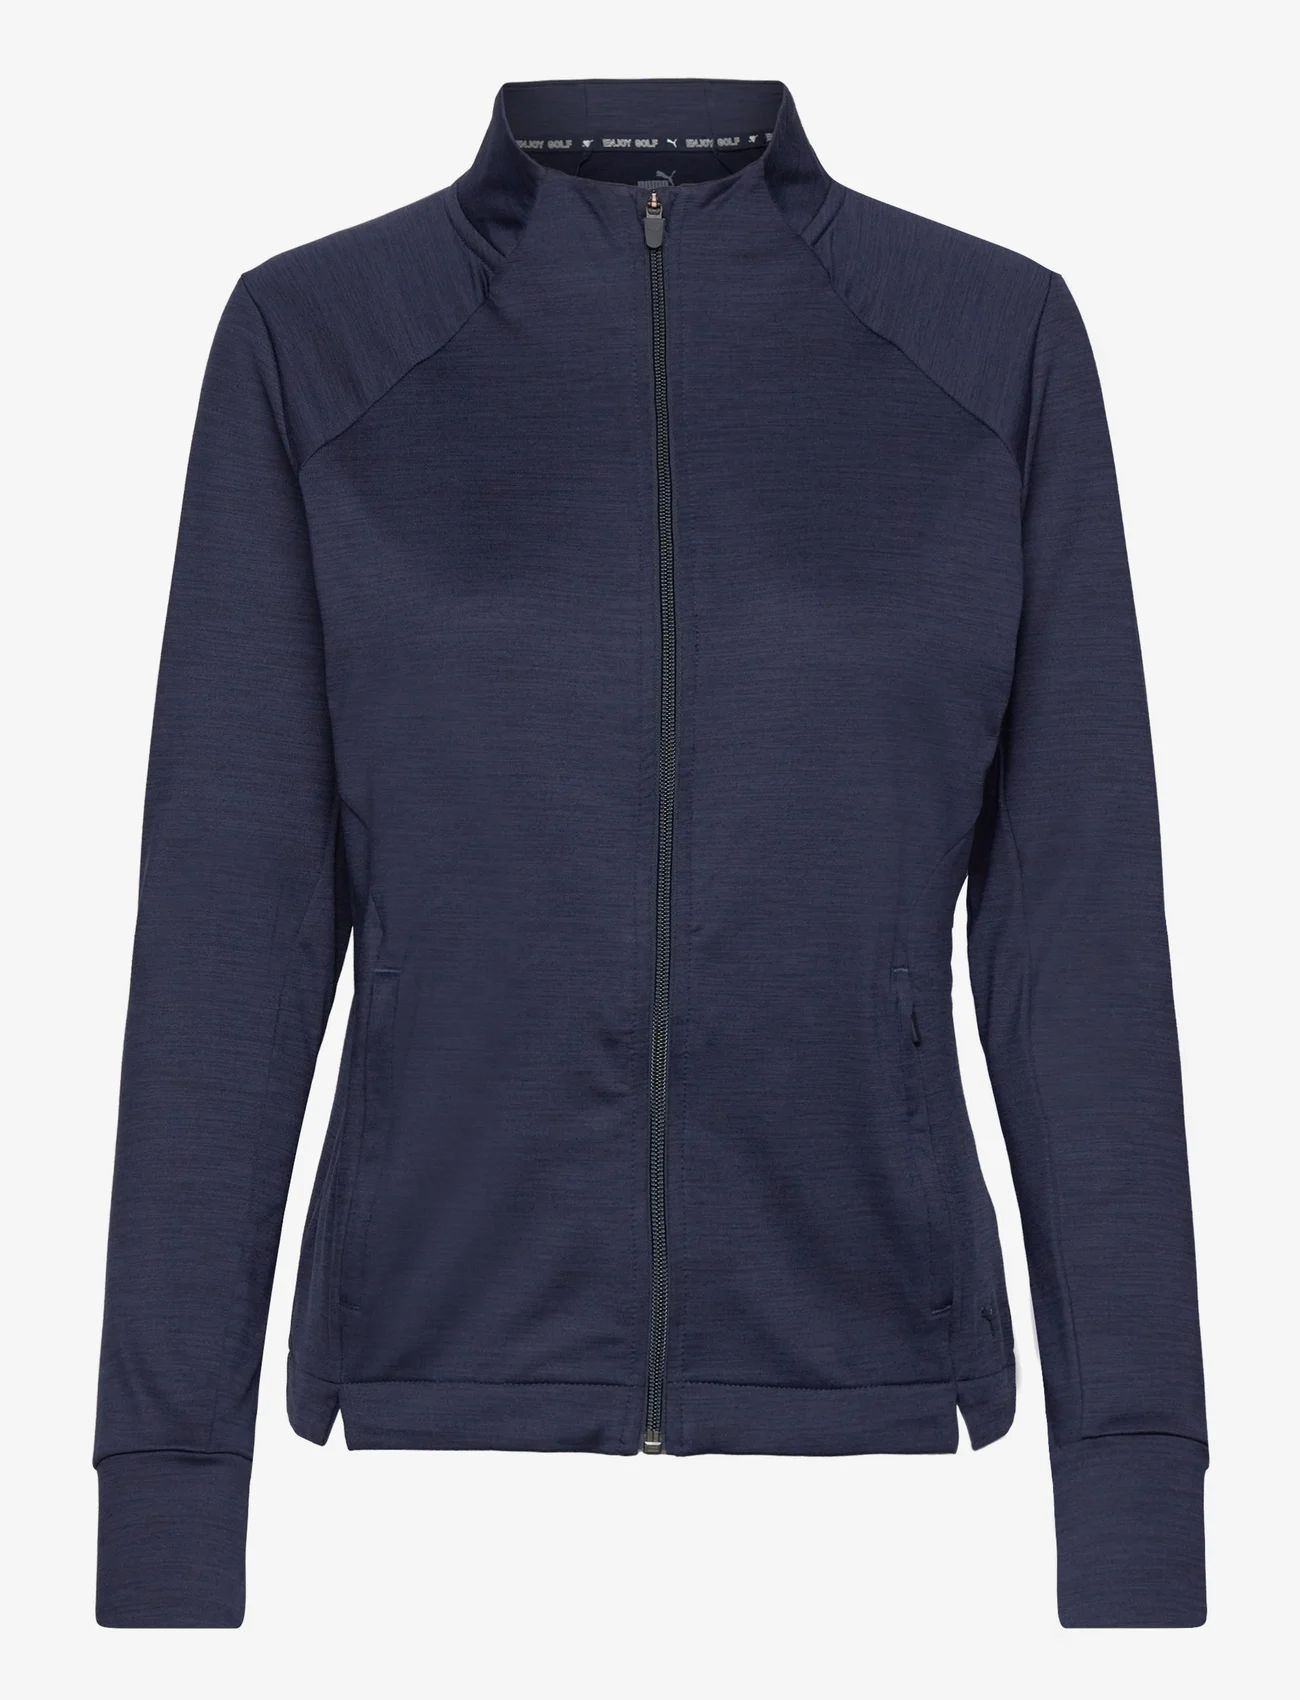 PUMA Golf - W Cloudspun Heather Full Zip Jacket - sweatshirts - navy blazer heather - 0